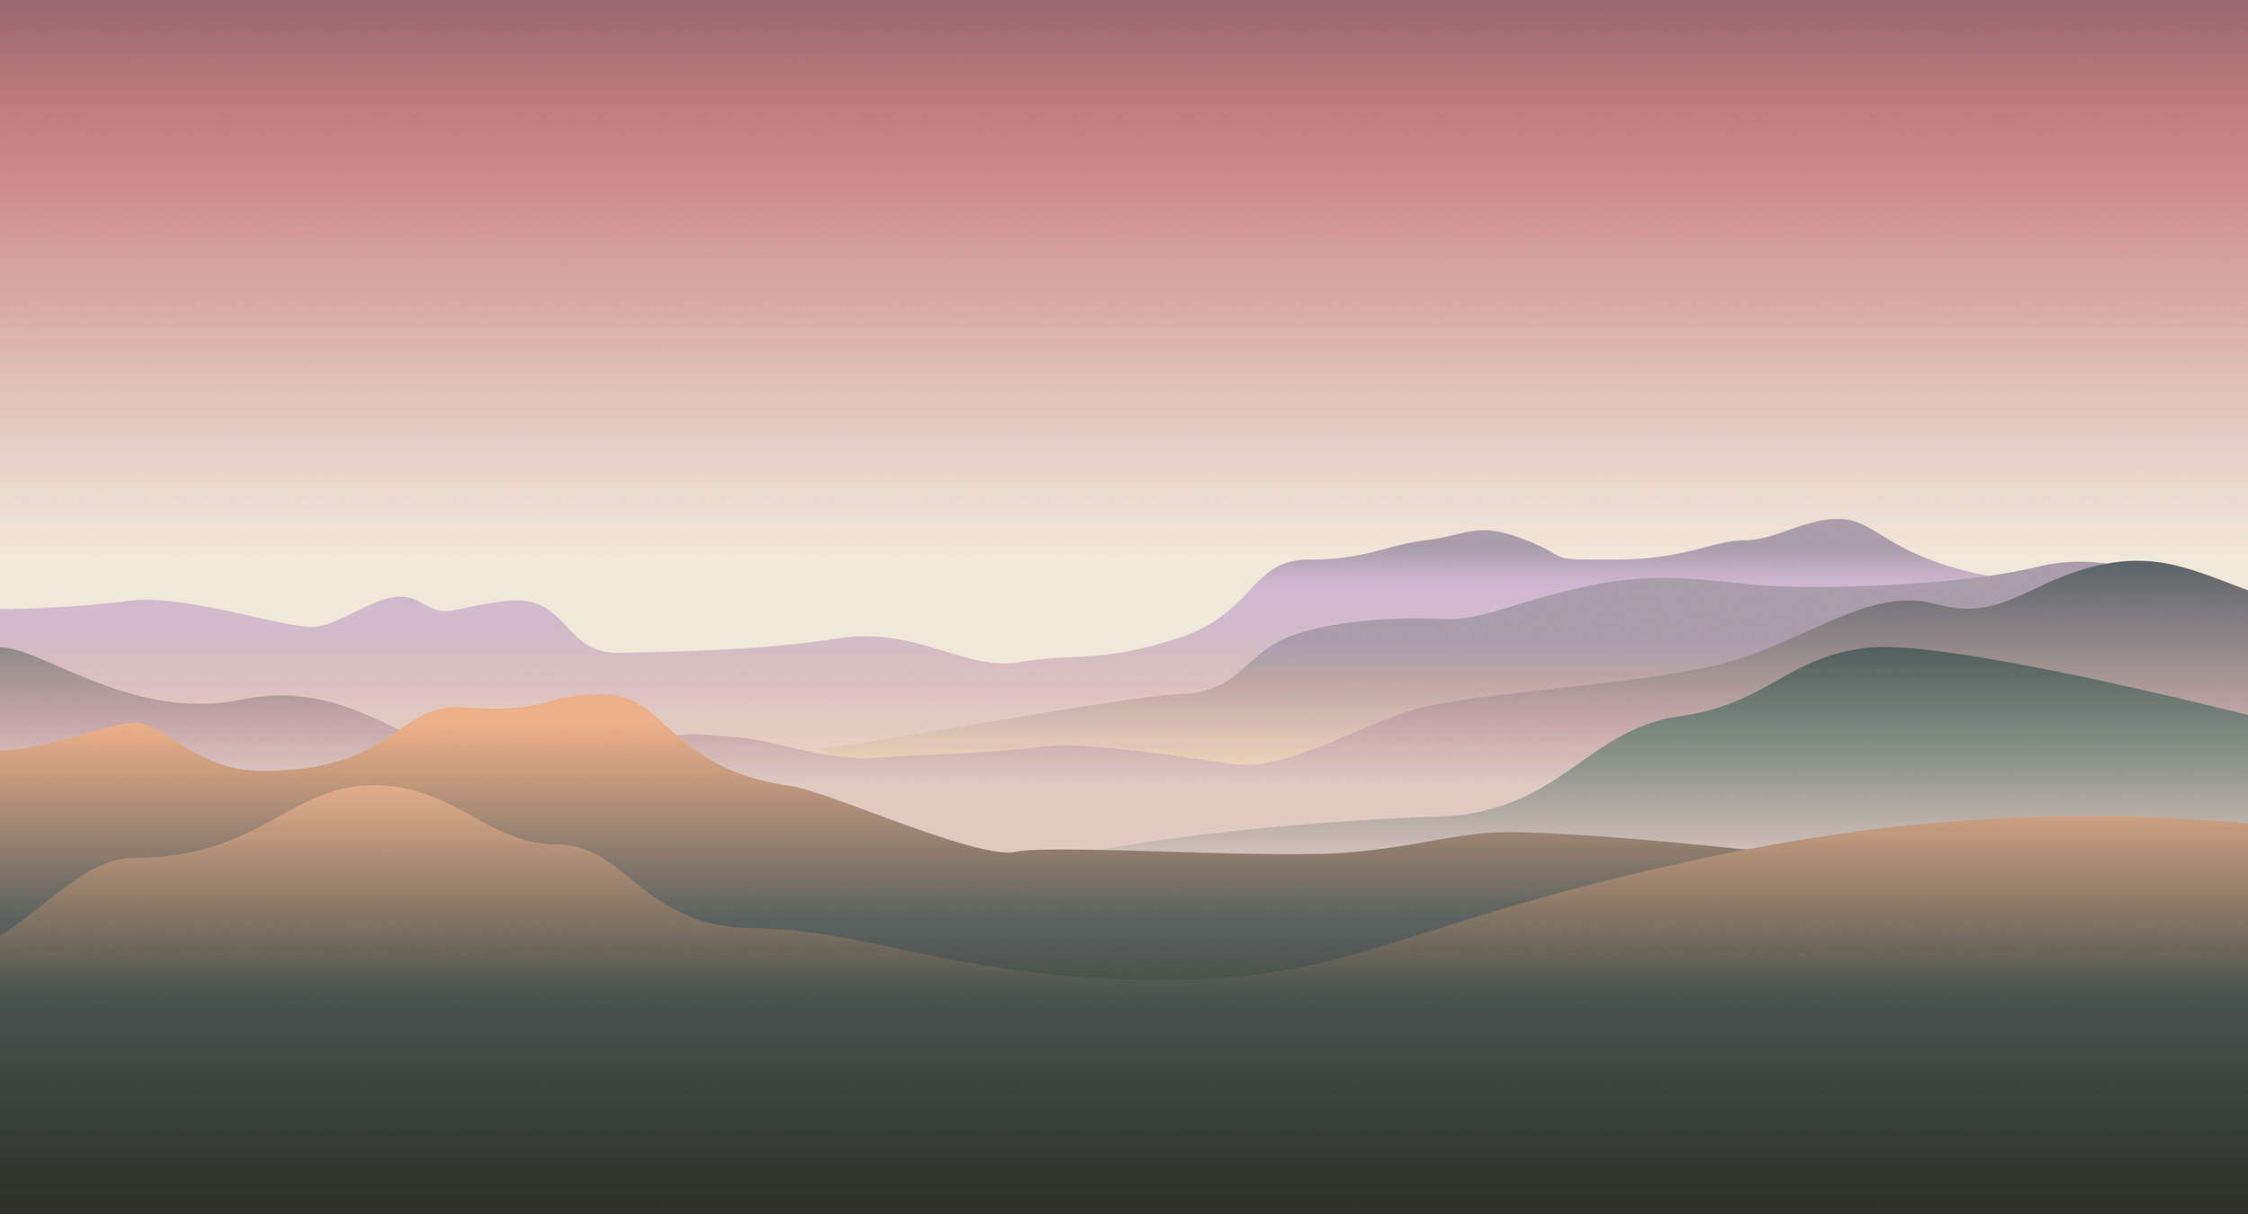             Photo wallpaper »terra« - Colourful mountain landscape - Smooth, slightly shiny premium non-woven fabric
        